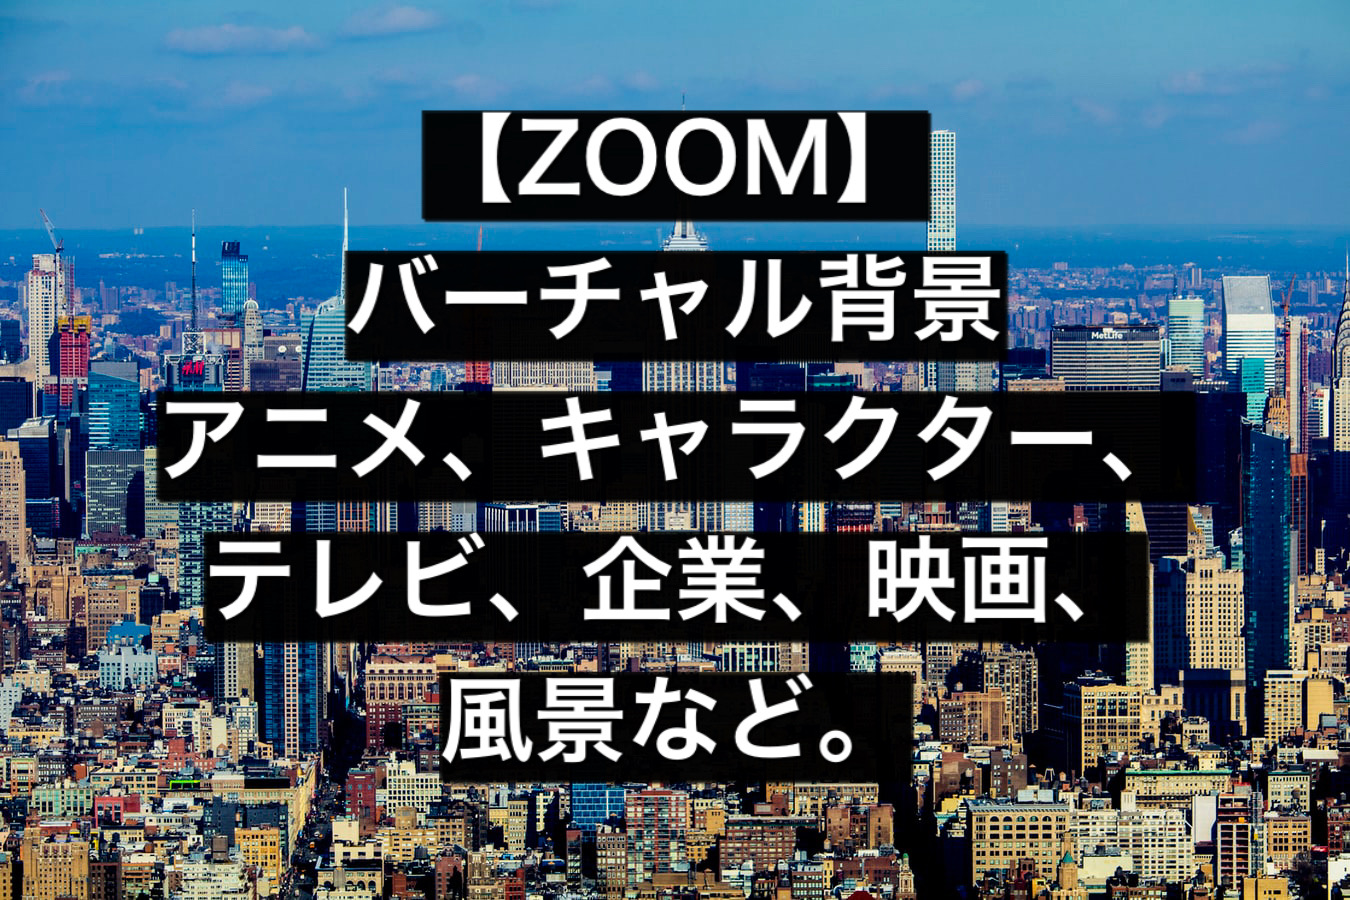 Zoom 壁紙 無料 Teams Zoom 背景画像を作る 表示する 無料